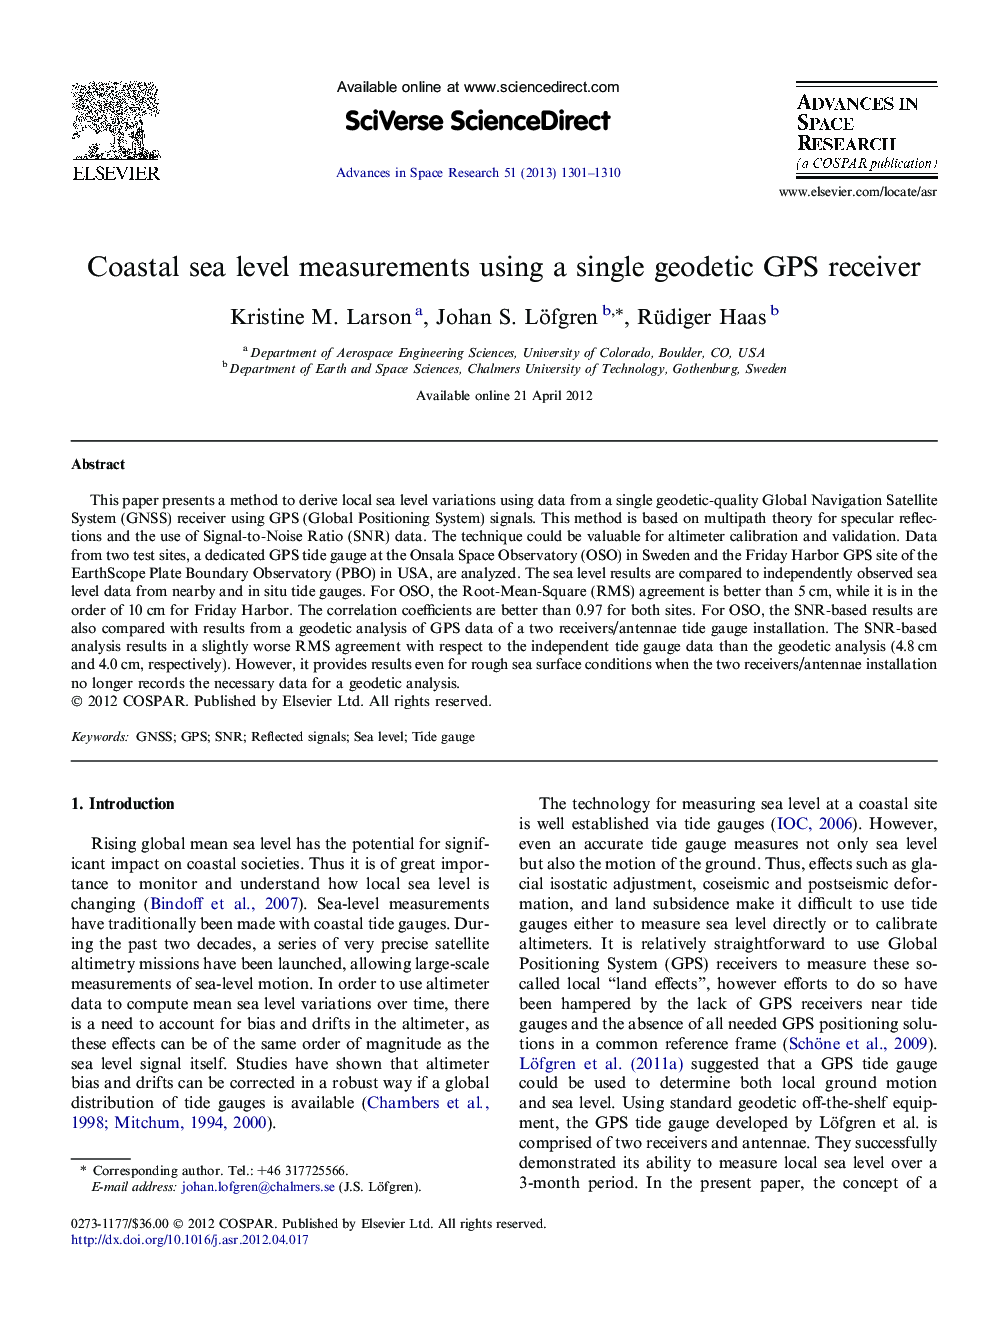 Coastal sea level measurements using a single geodetic GPS receiver